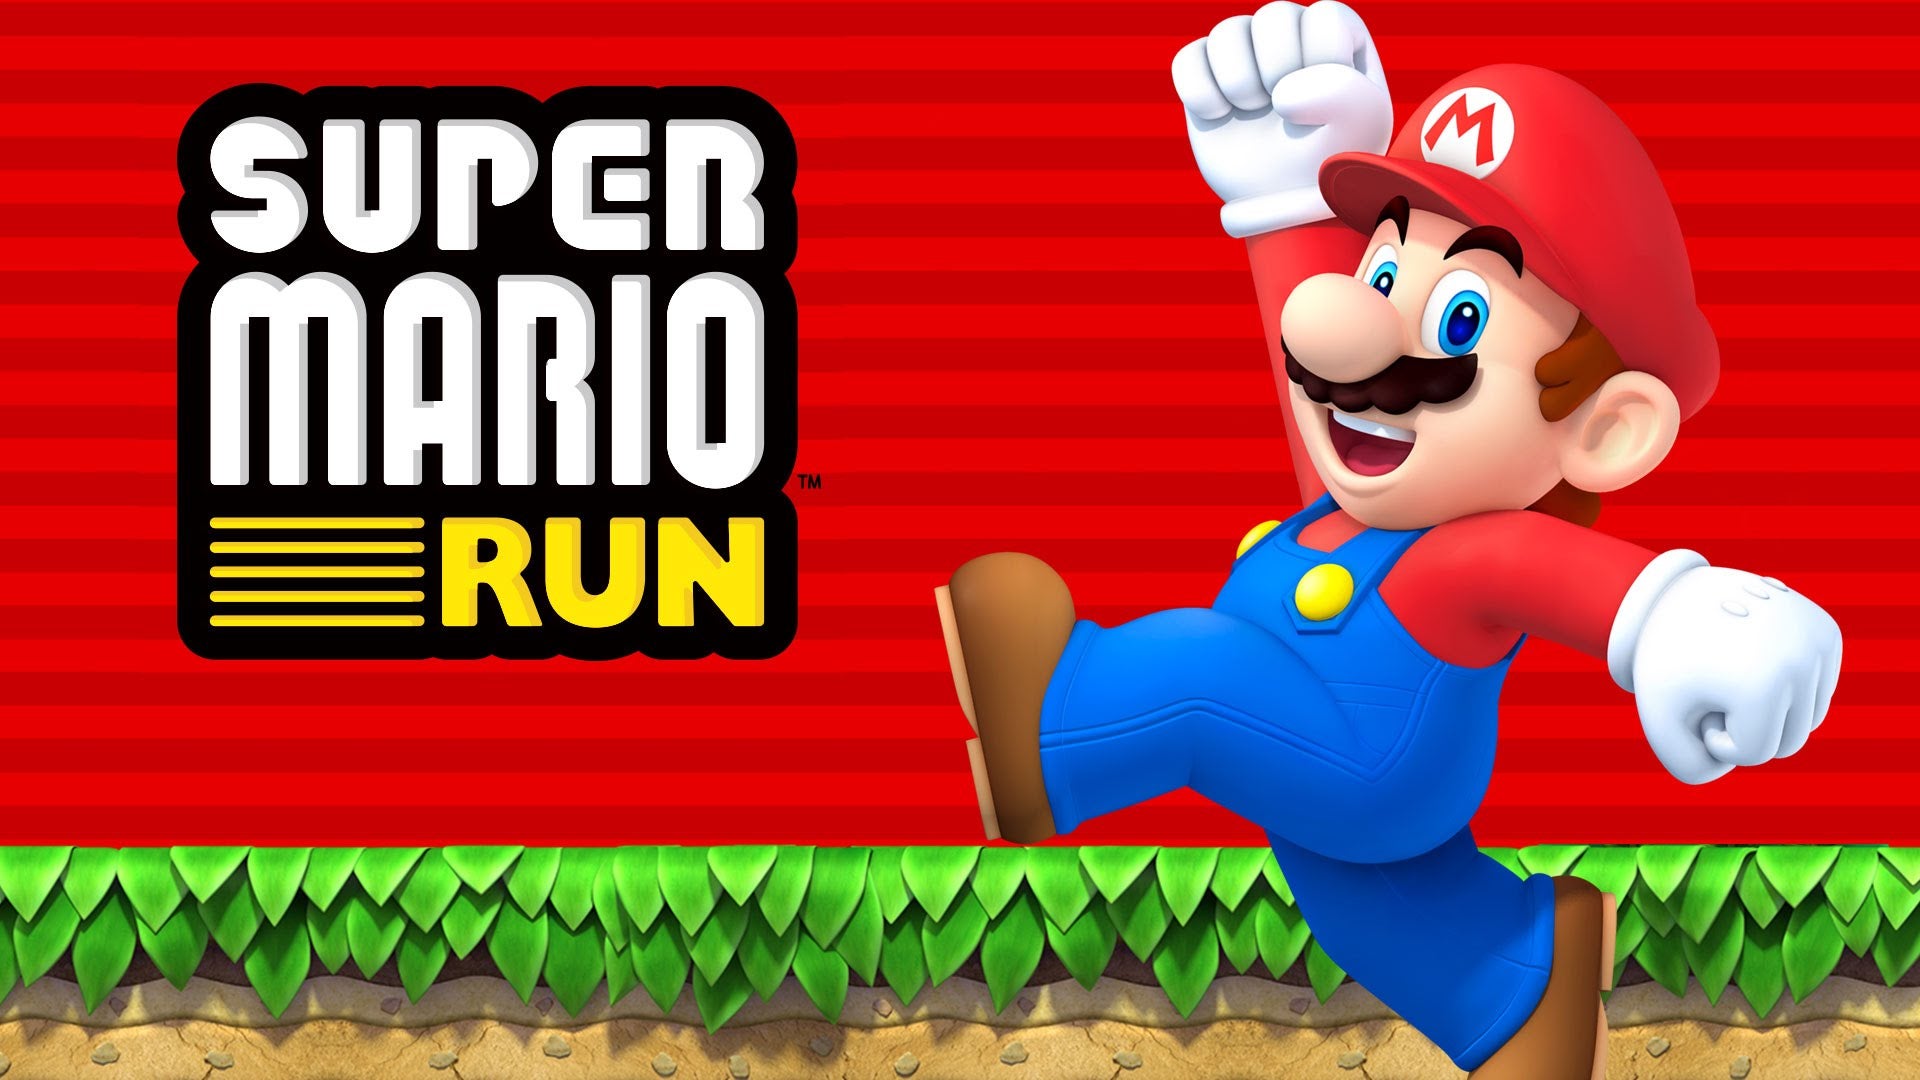 Bad reviews of Super Mario Run cause Nintendo shares to plummet